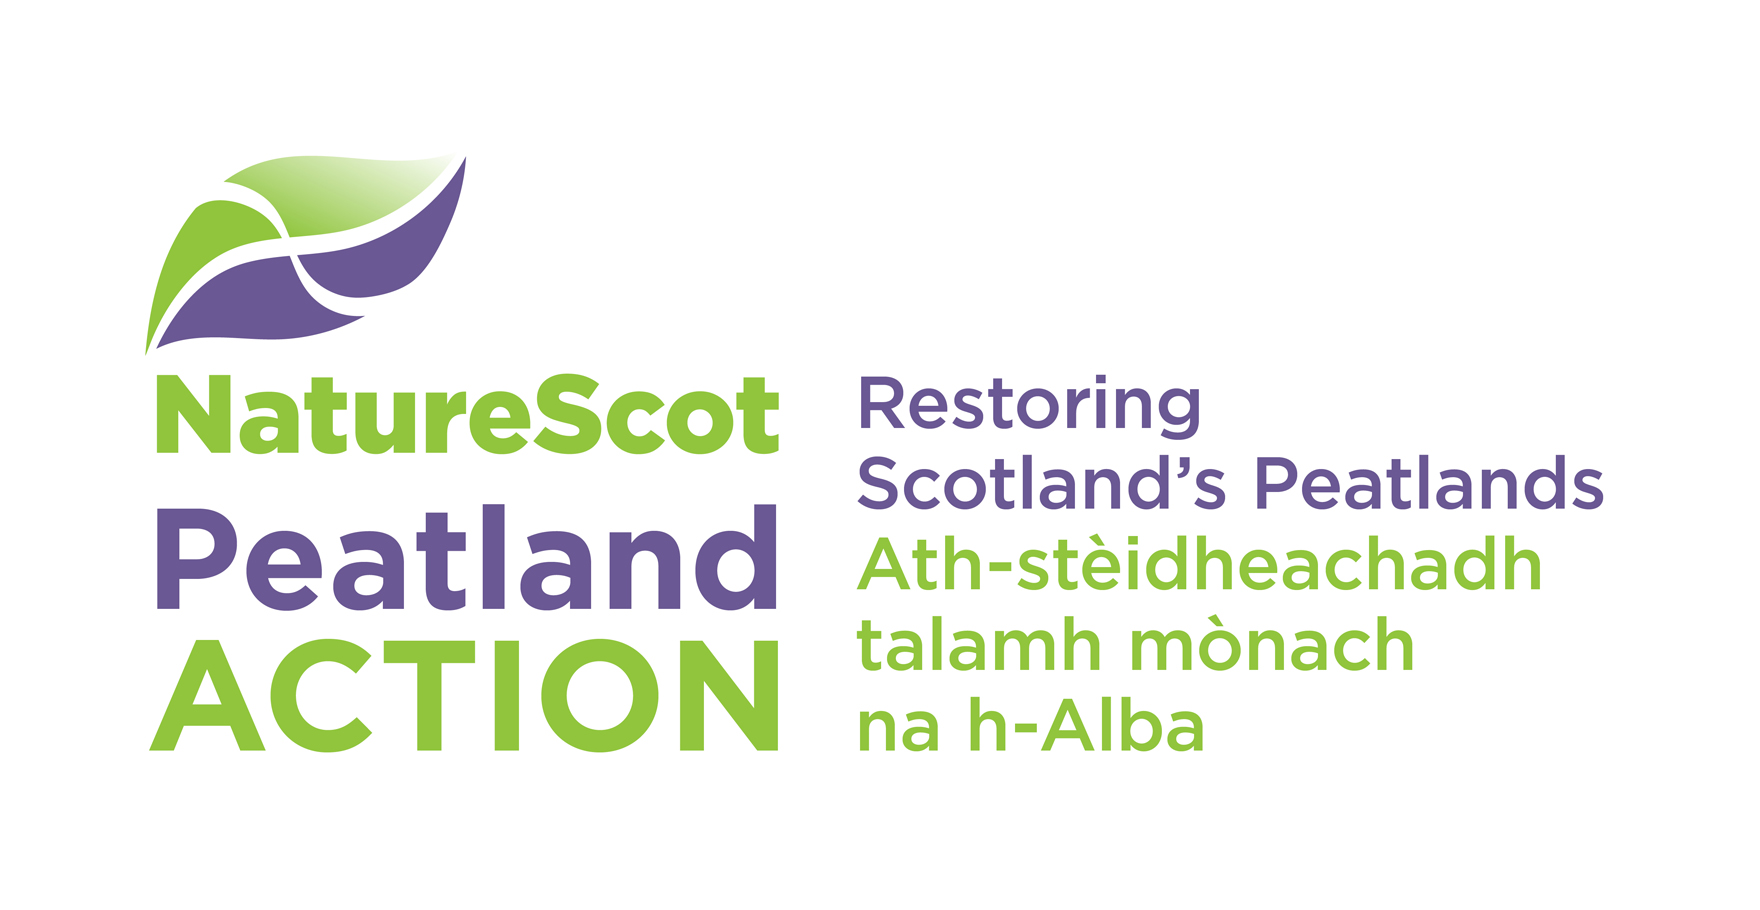 Peatland ACTION dual language logo jpg.